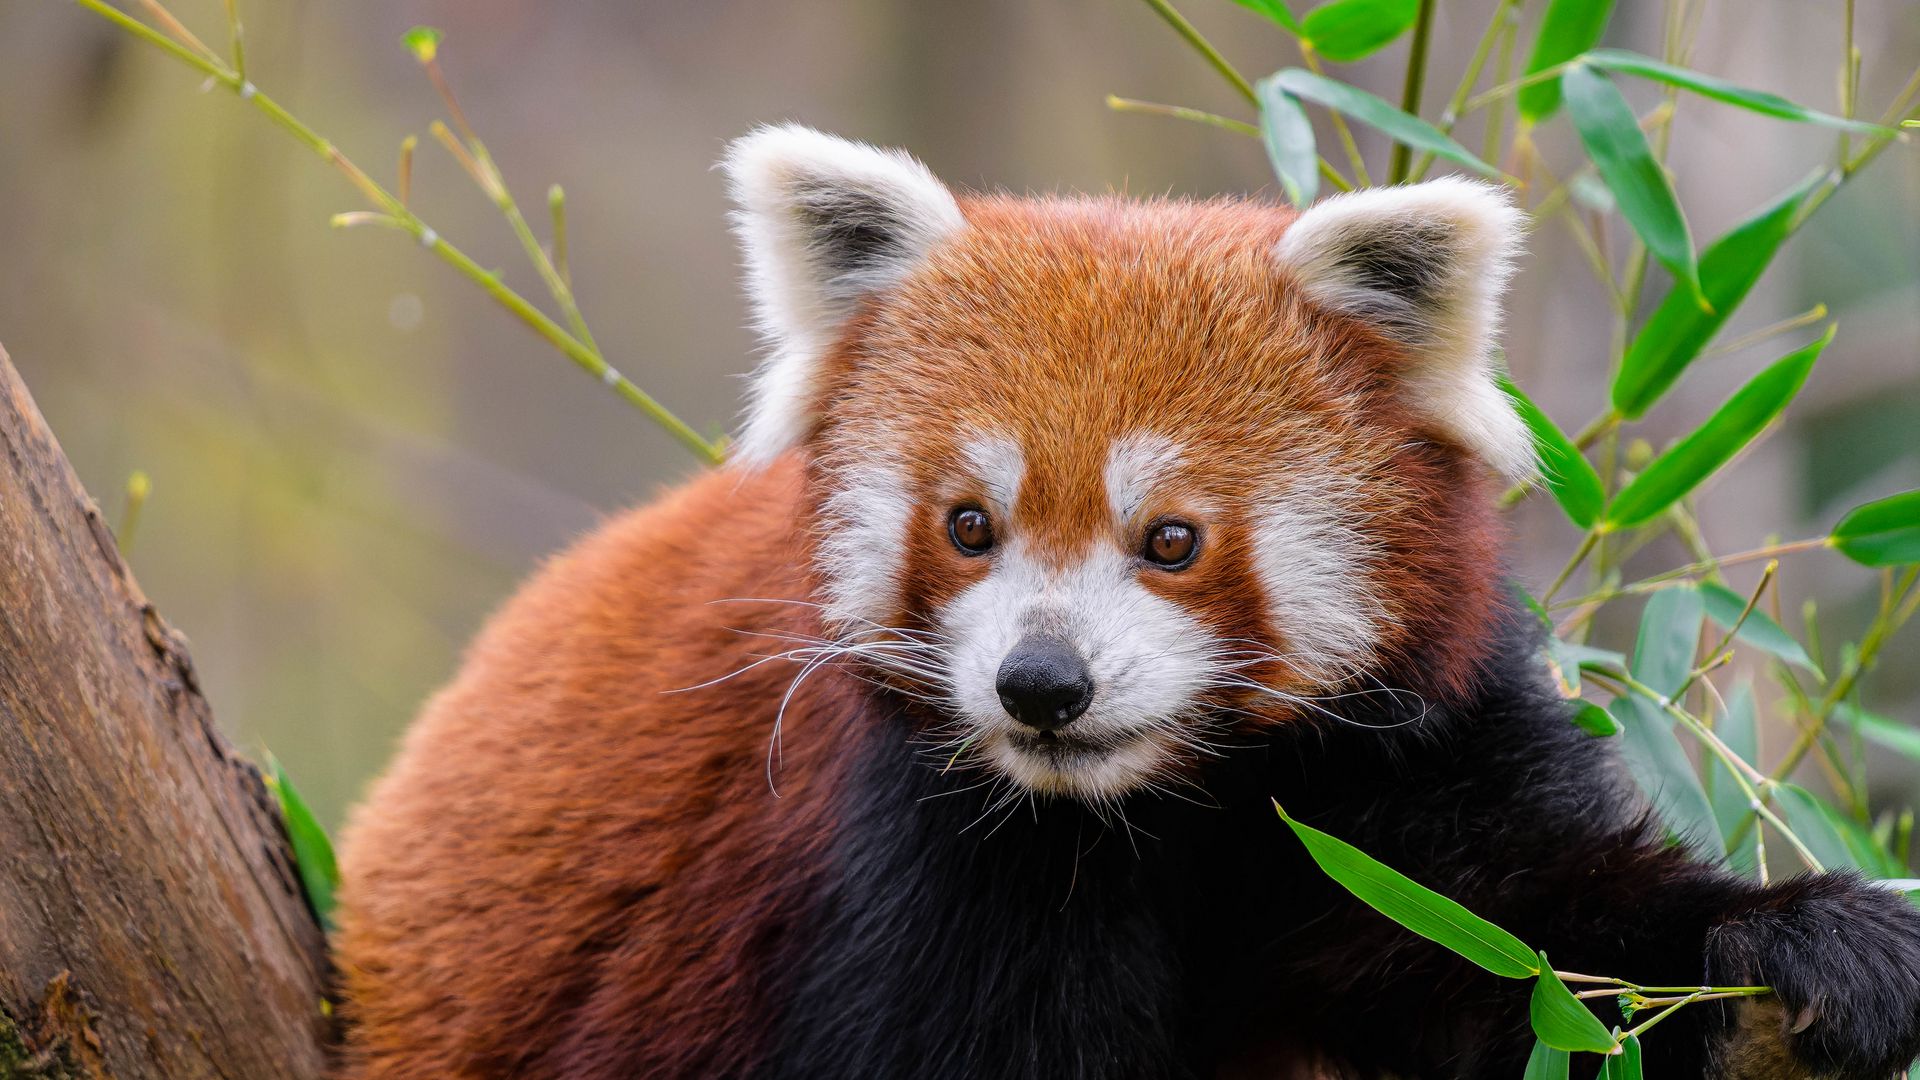 Download wallpaper 1920x1080 red panda, animal, wildlife, cute, furry full  hd, hdtv, fhd, 1080p hd background